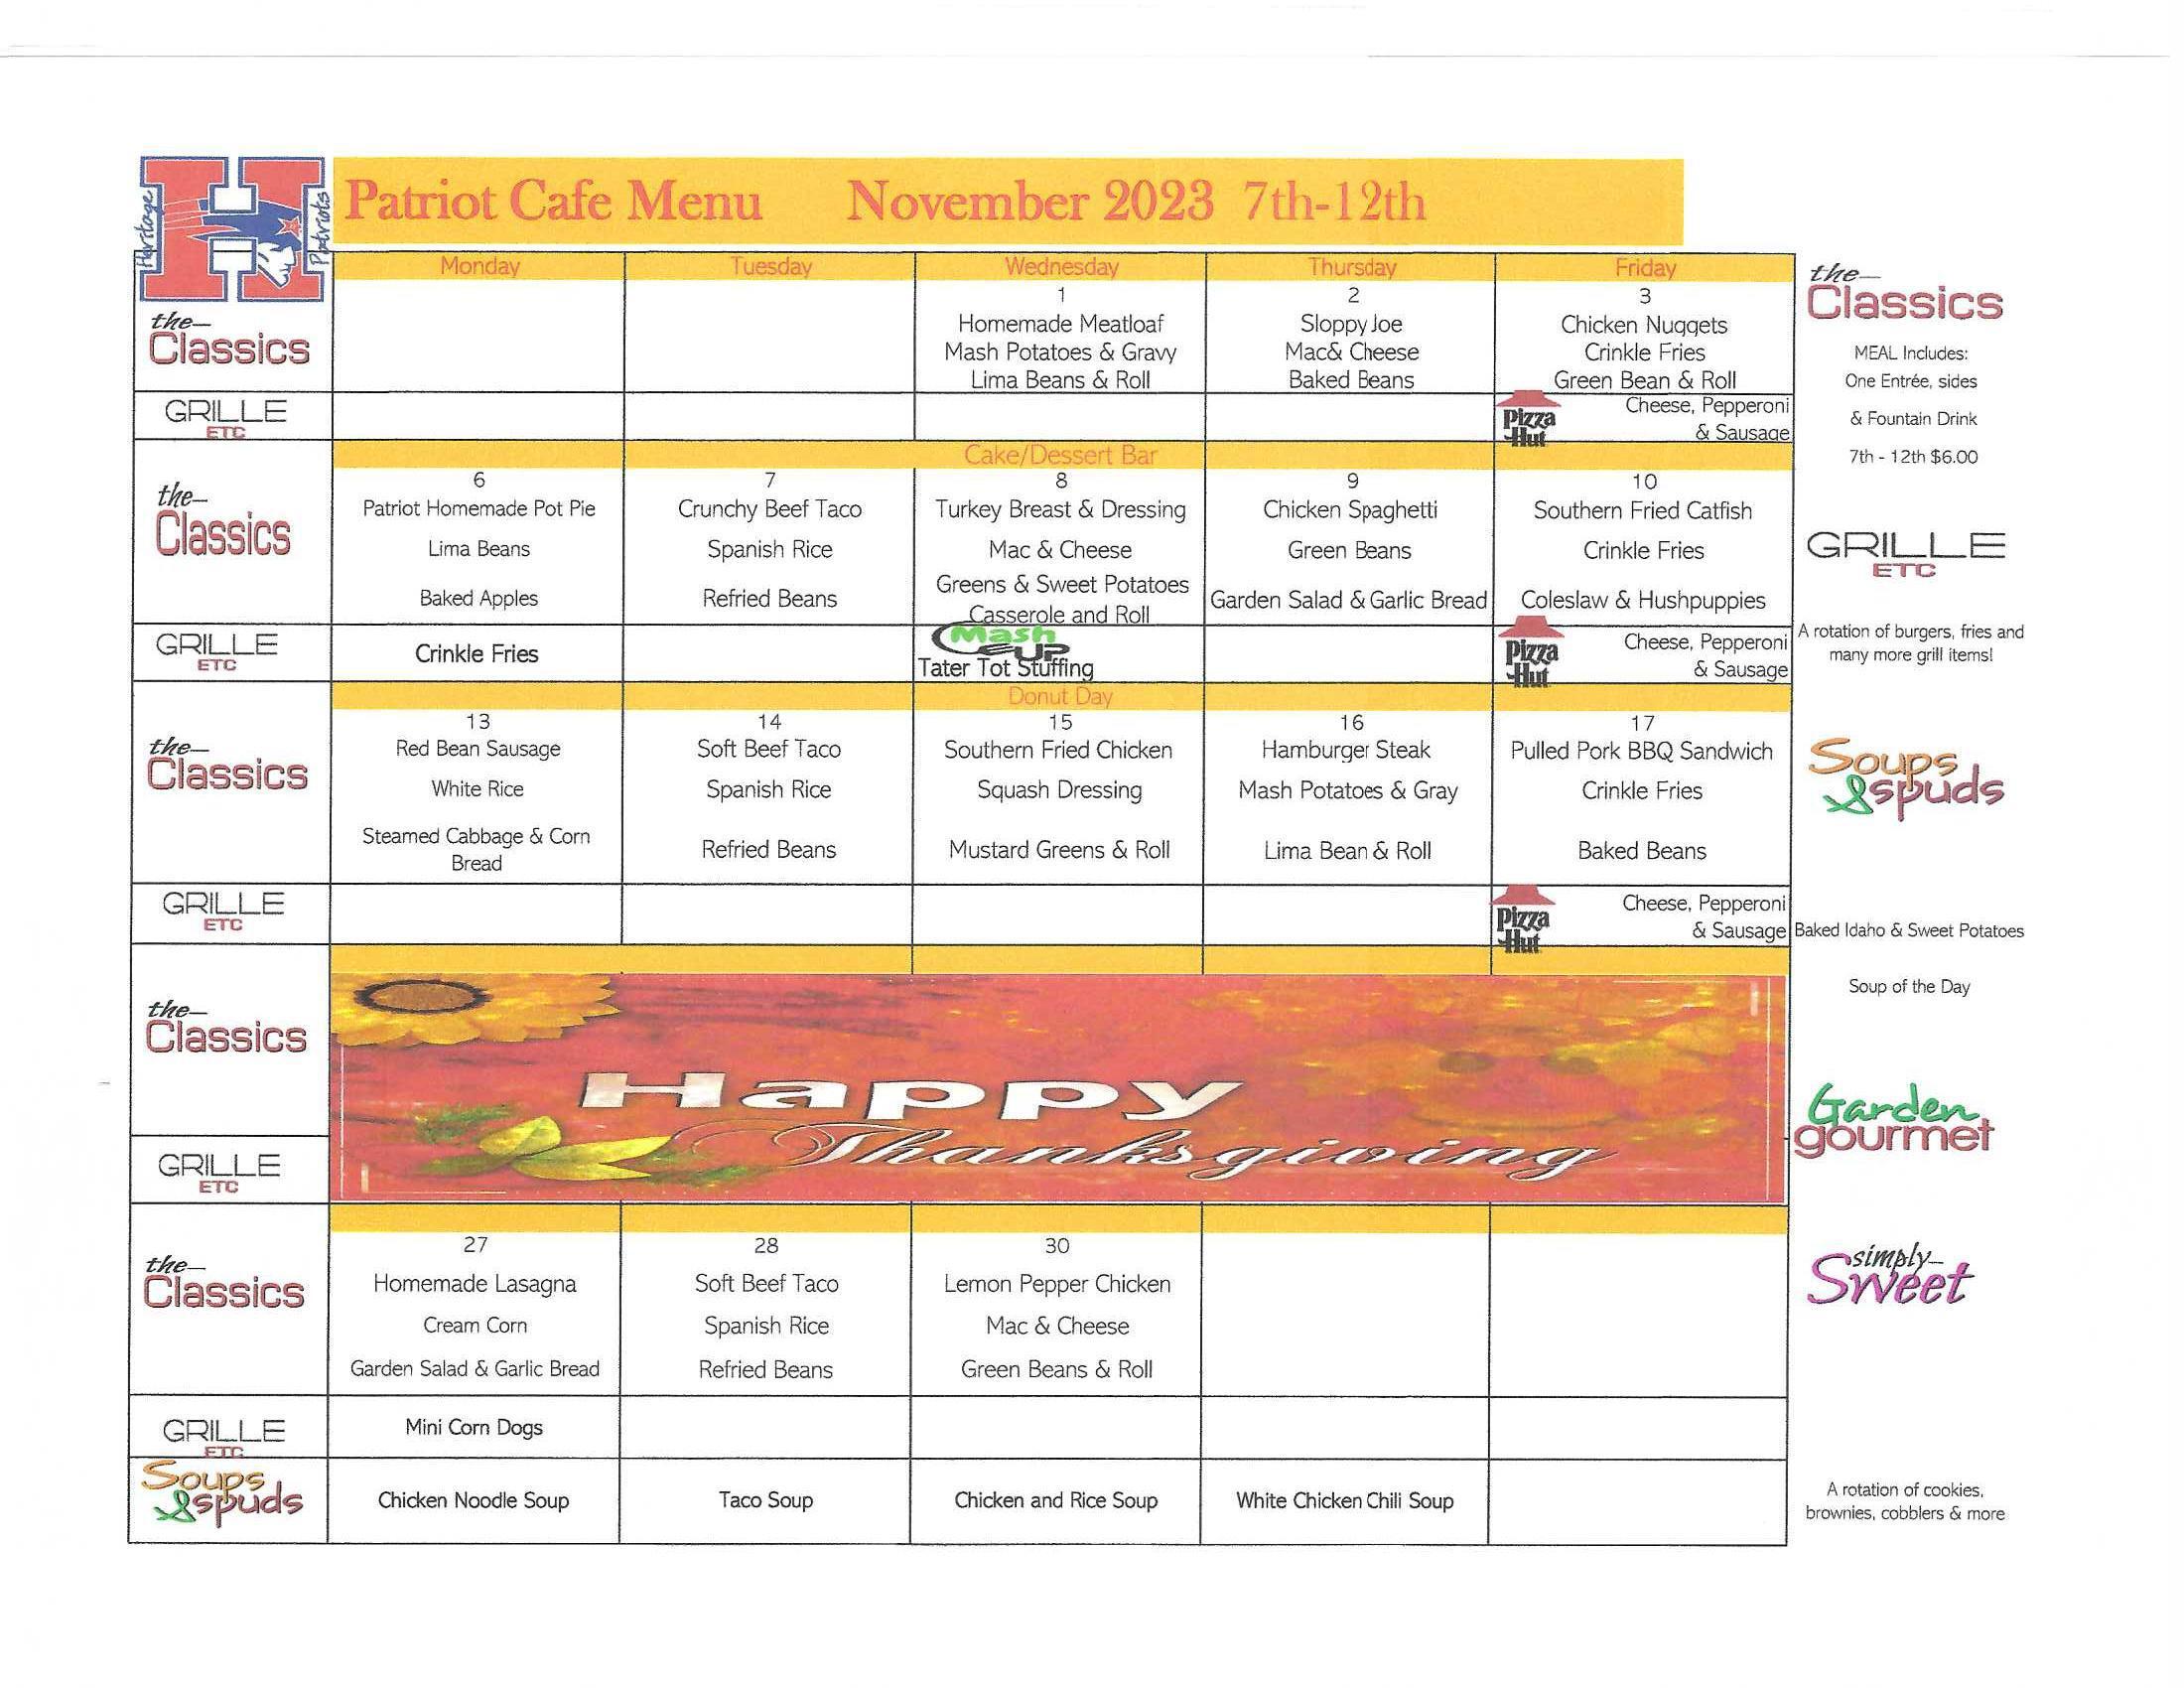 November Patriot Cafe Menu - Grades 7-12